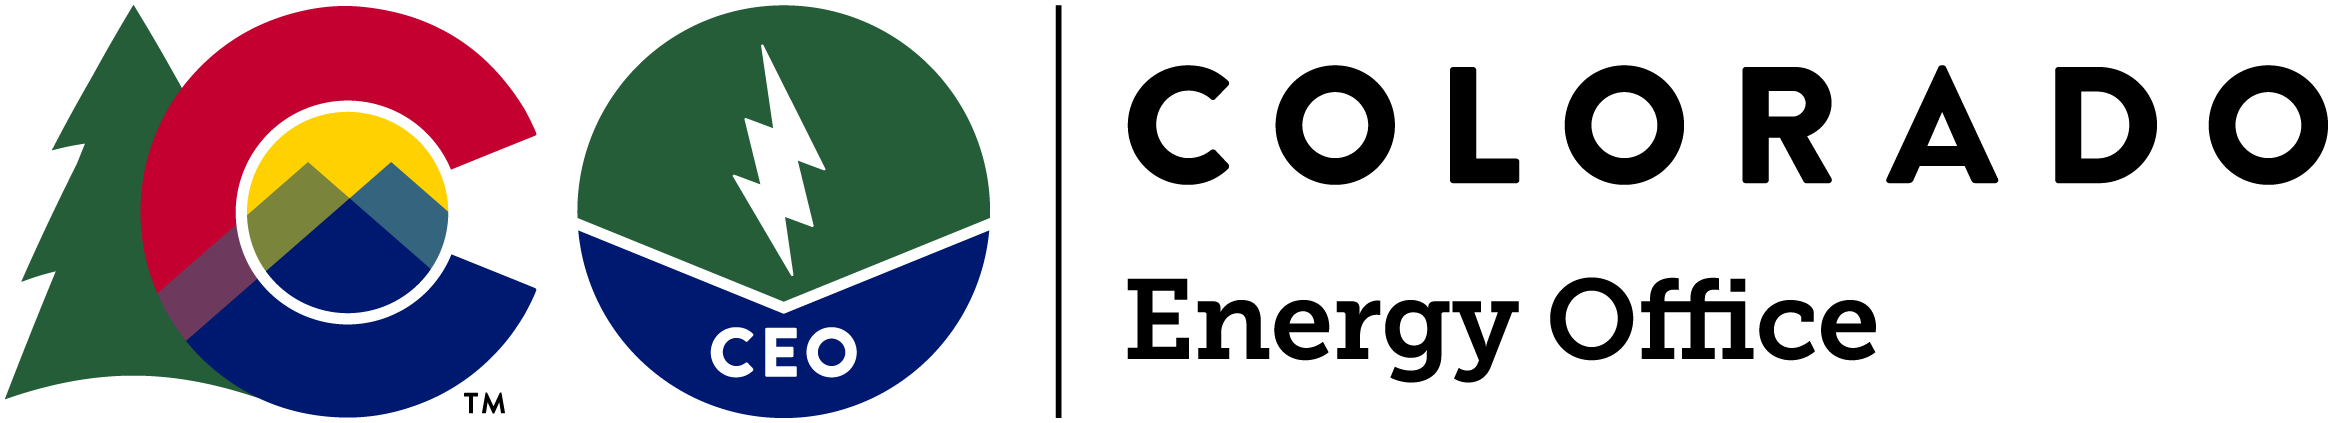 Organization logo of Colorado Energy Office